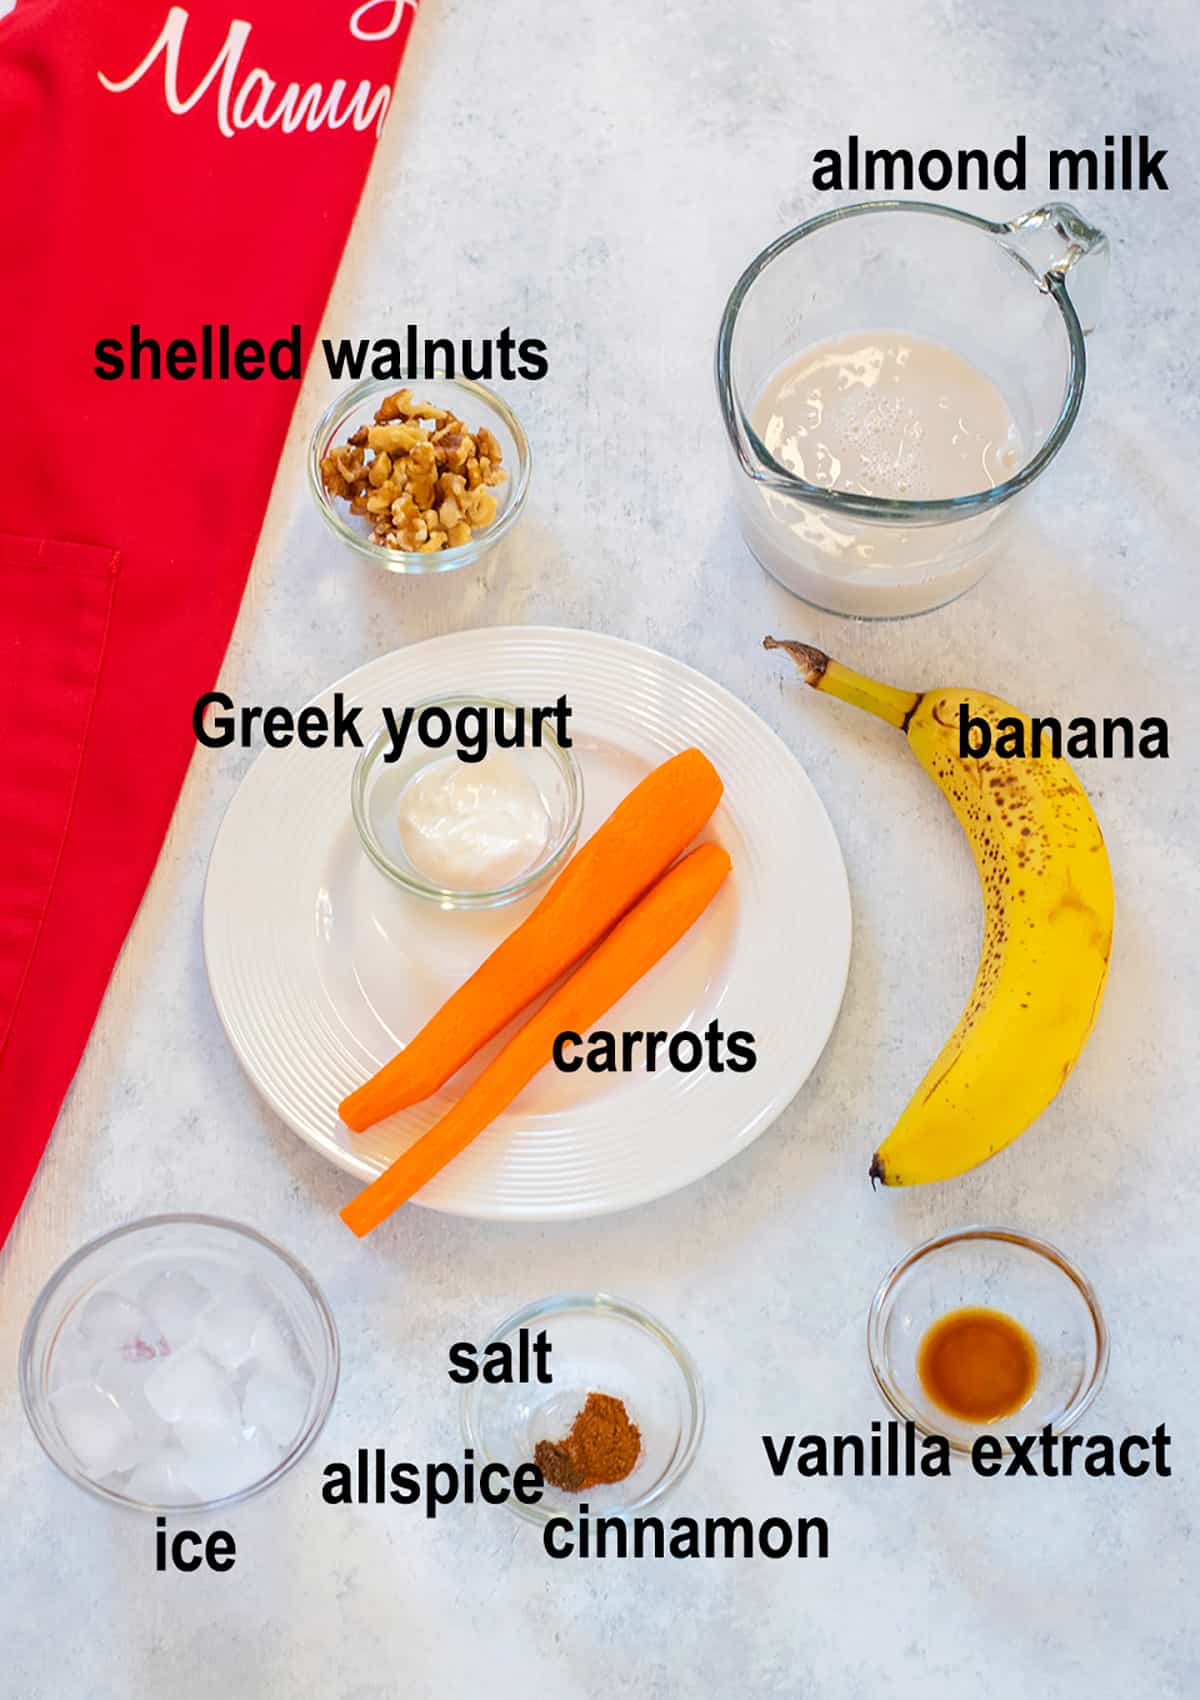 banana, carrots, walnuts, milk, yogurt, vanilla, seasonings